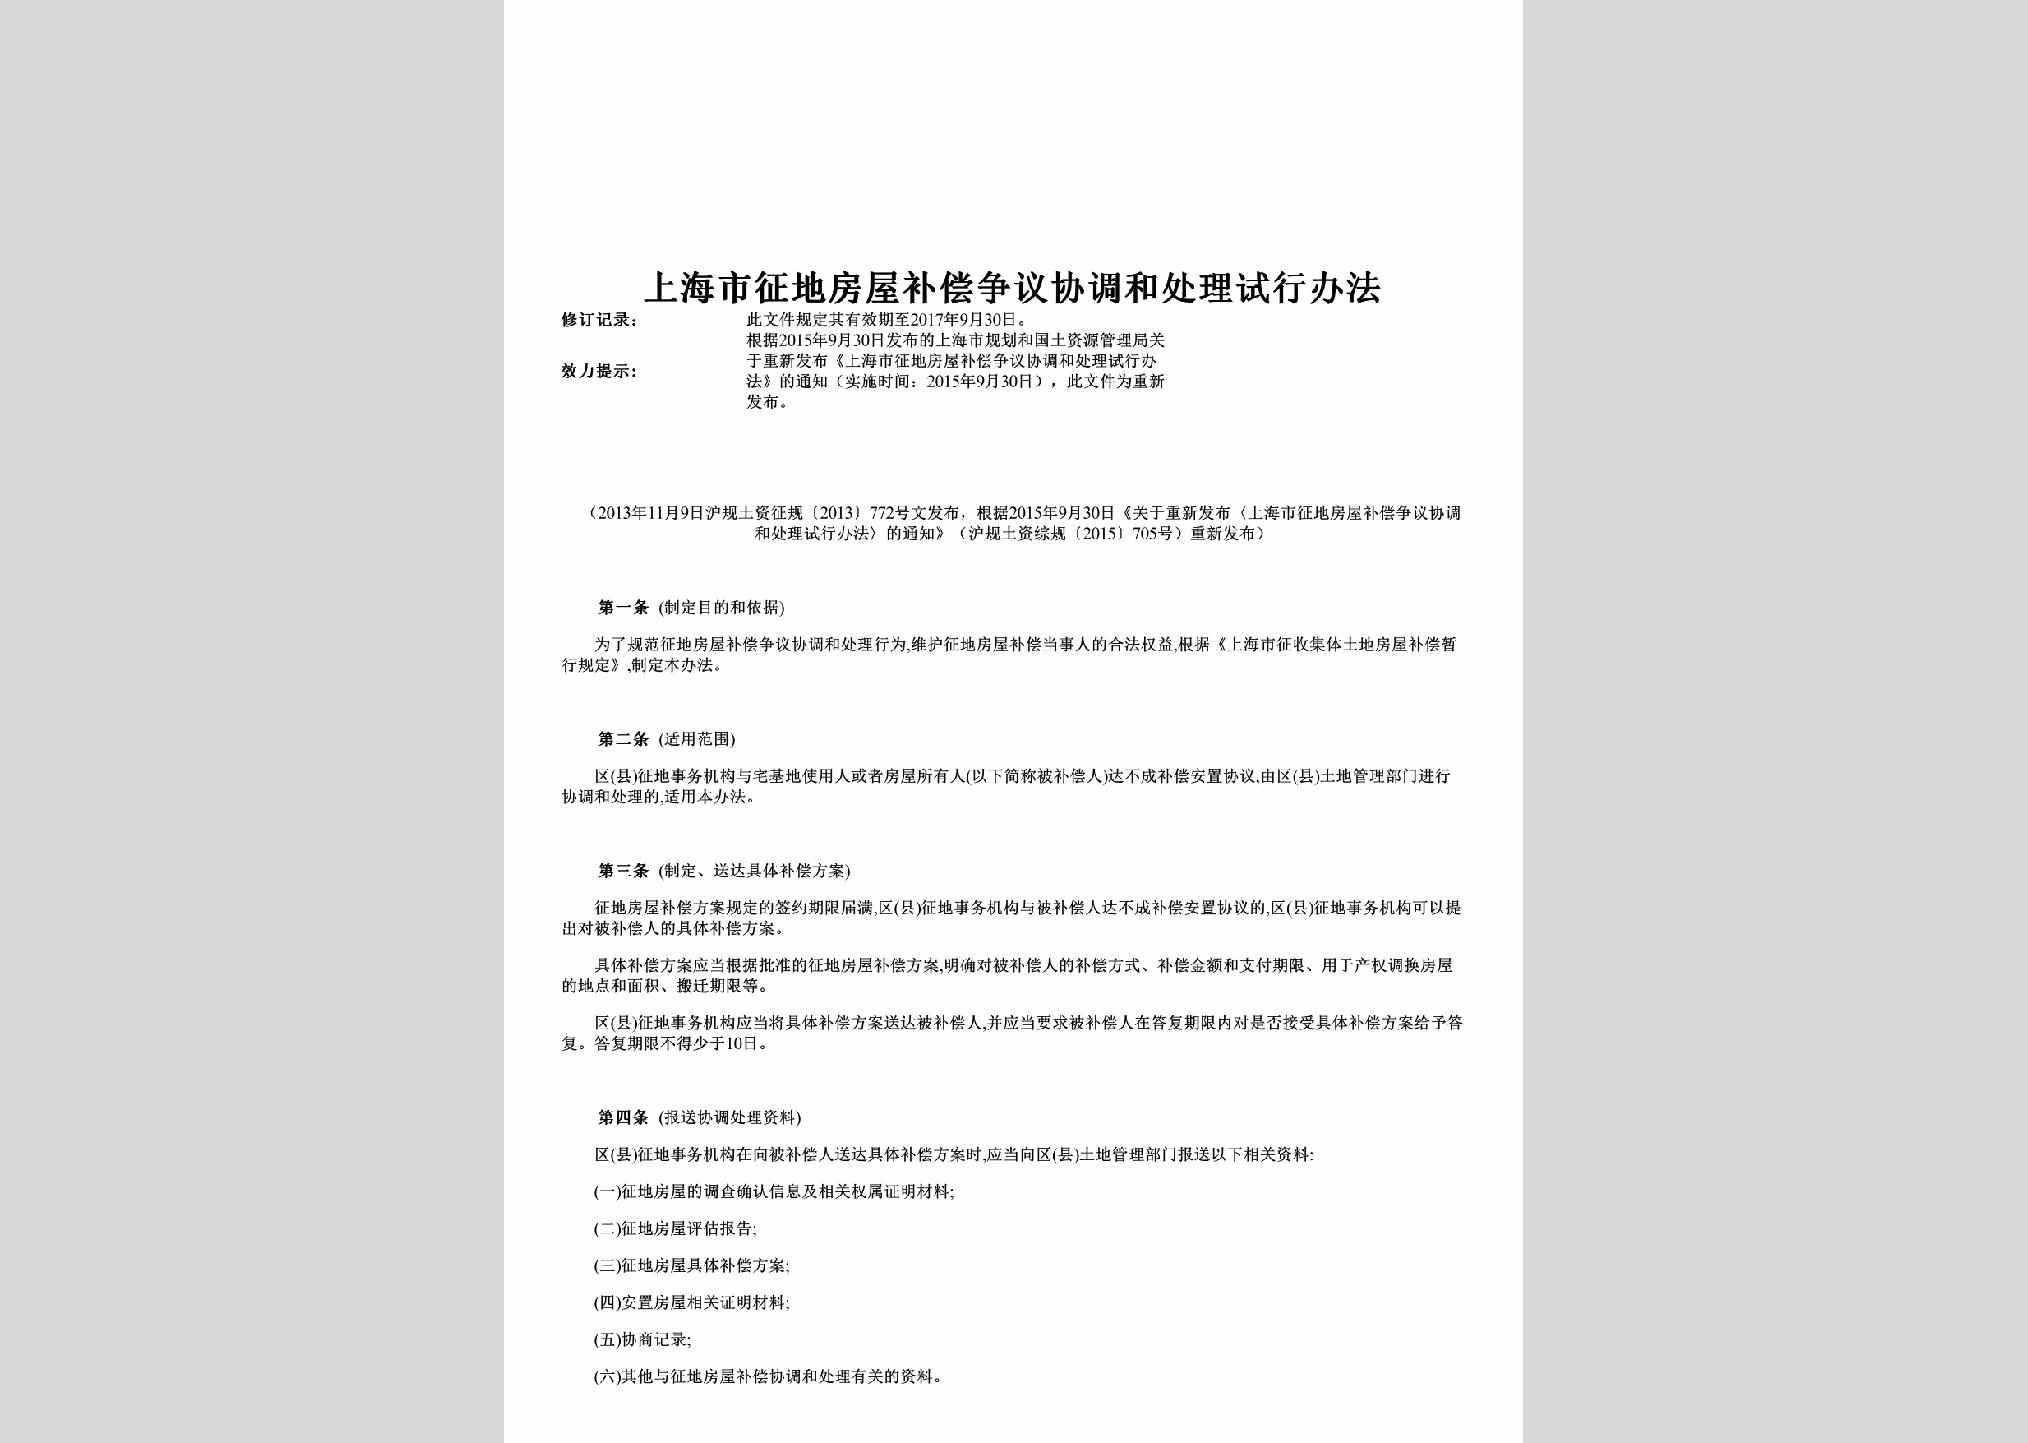 SH-FWBCZYCL-2013：上海市征地房屋补偿争议协调和处理试行办法